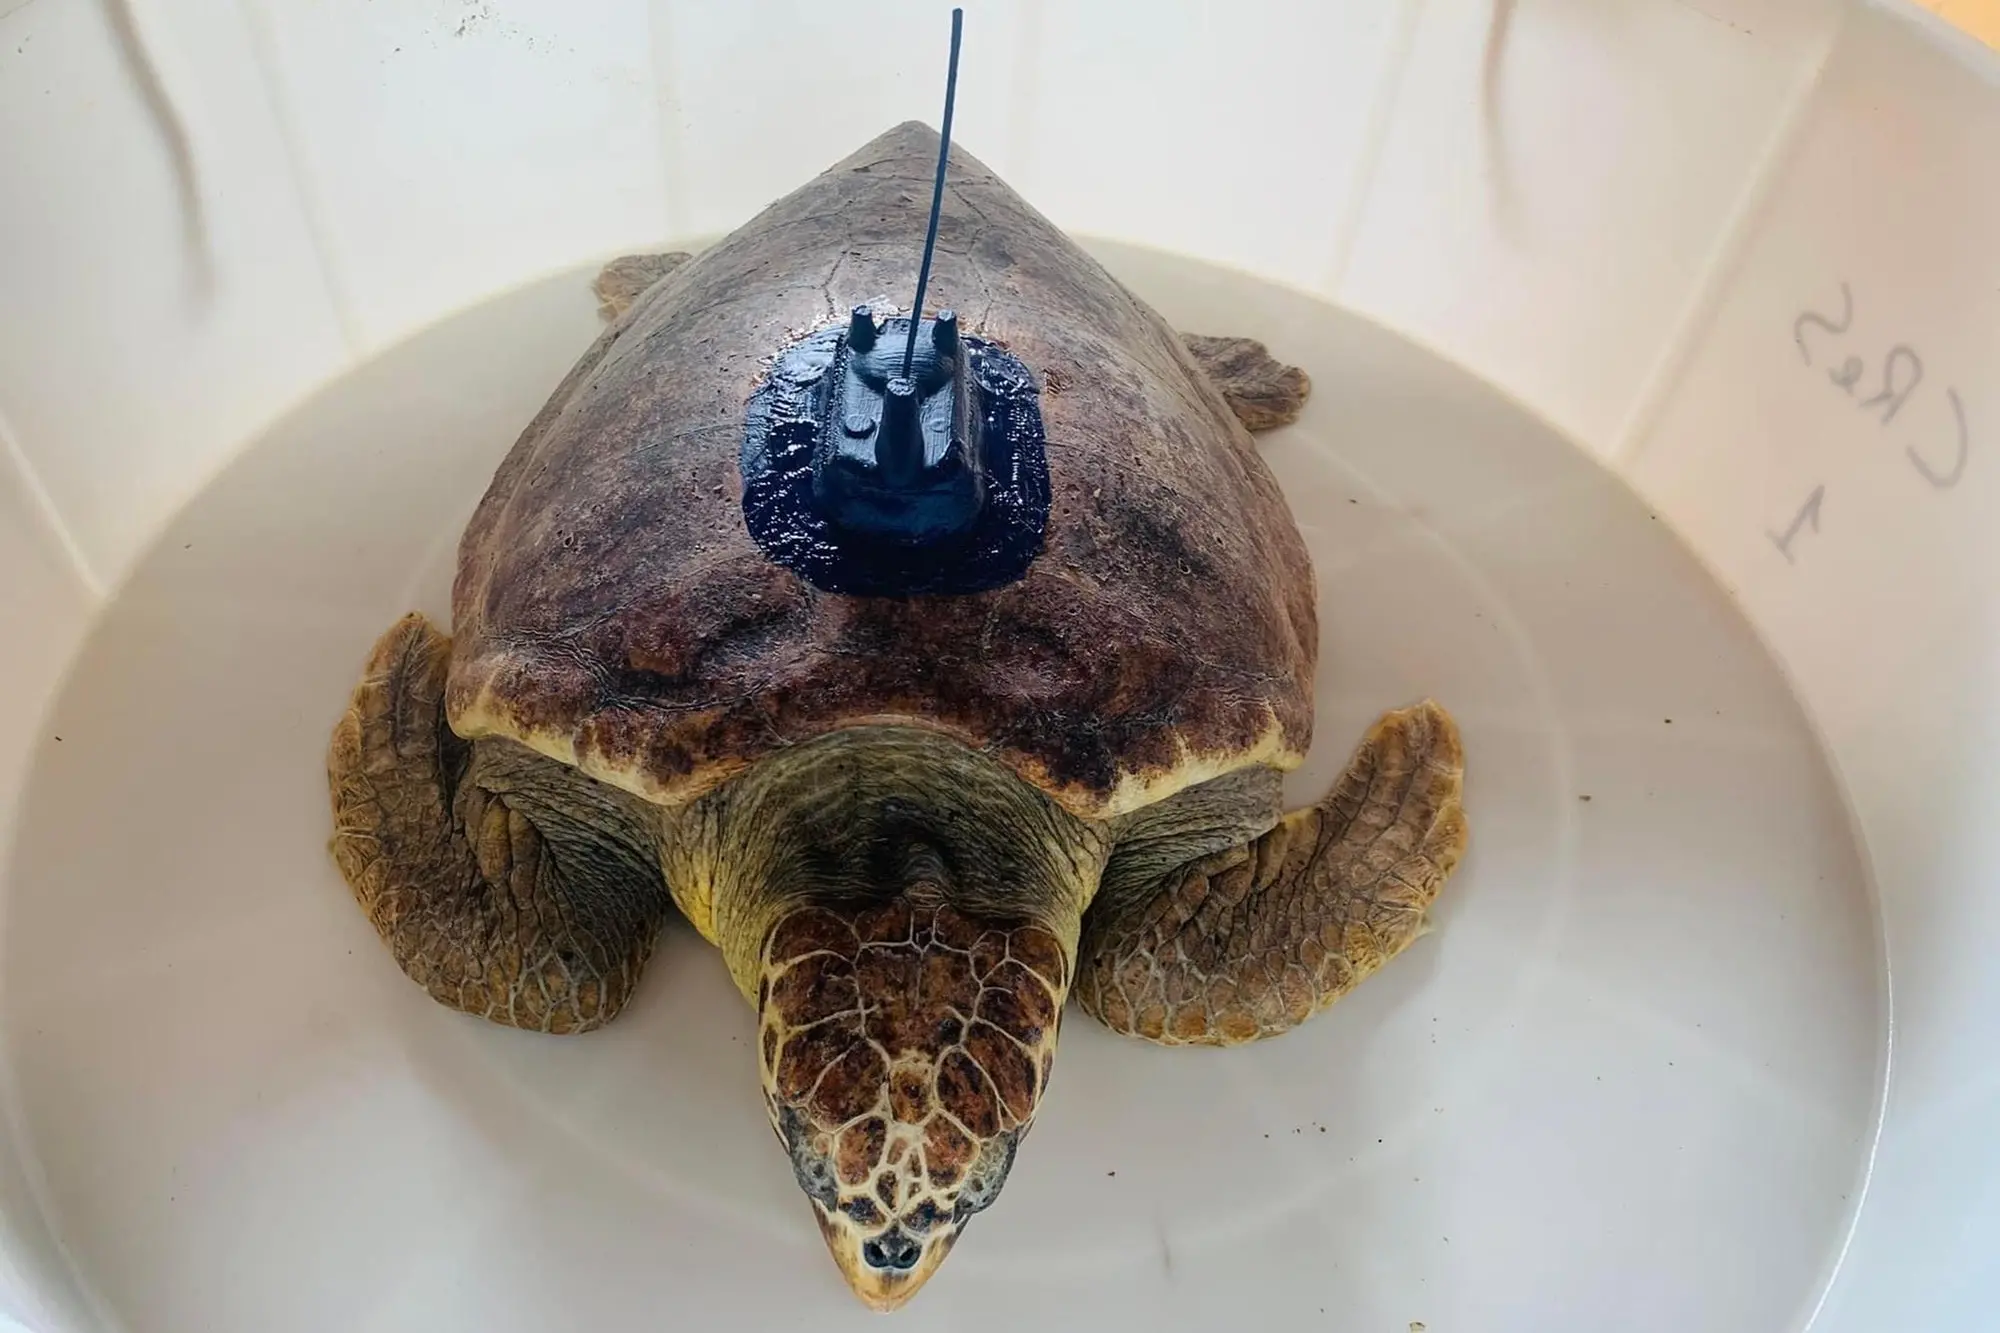 La tartaruga che verrà liberata (foto concessa)